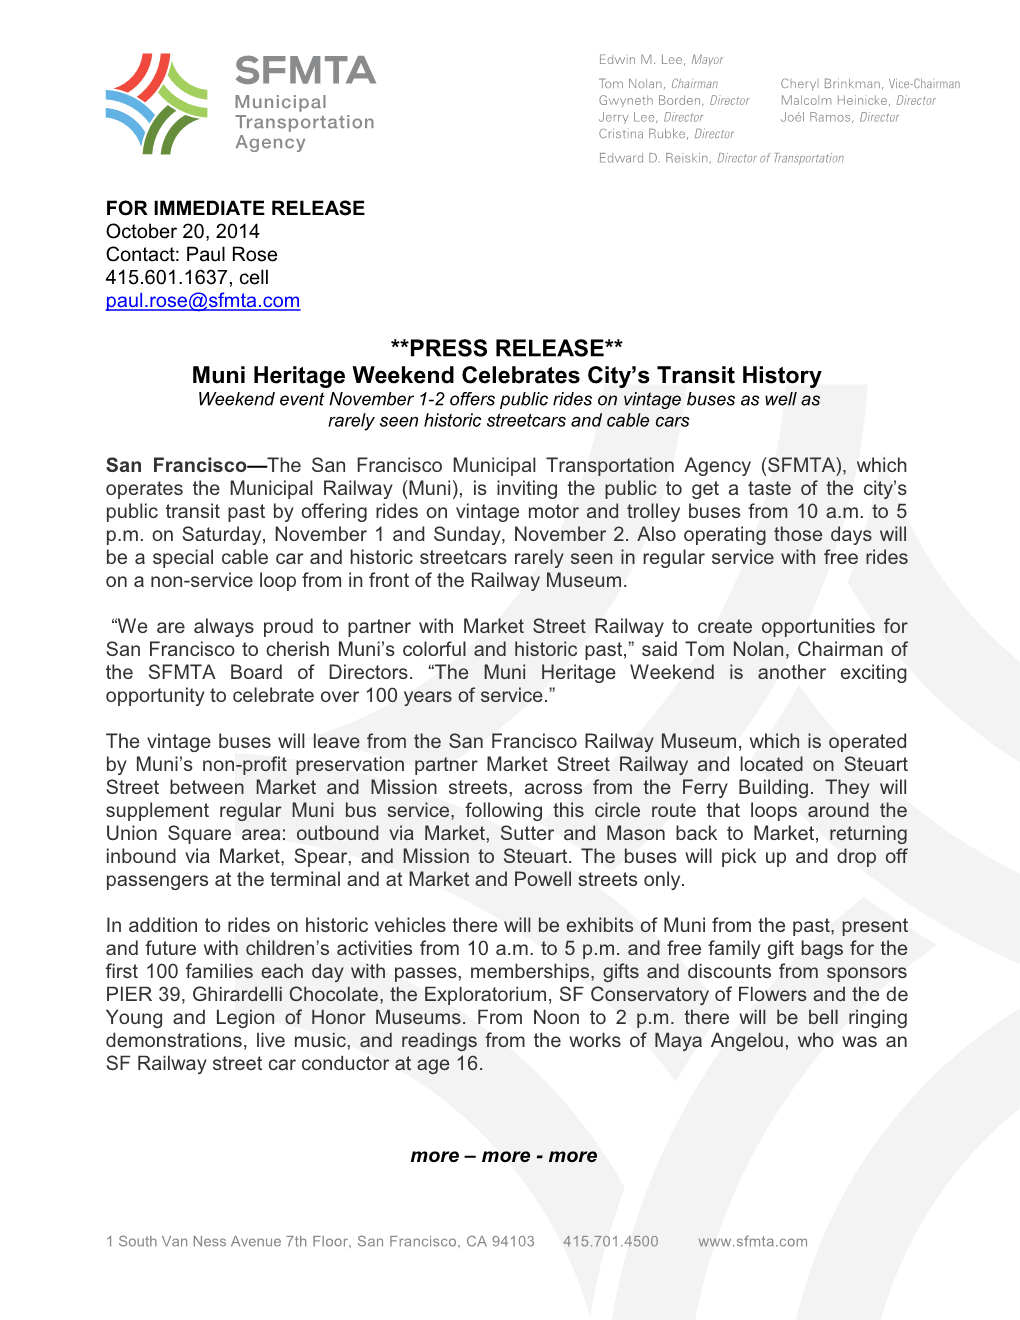 PRESS RELEASE** Muni Heritage Weekend Celebrates City's Transit History